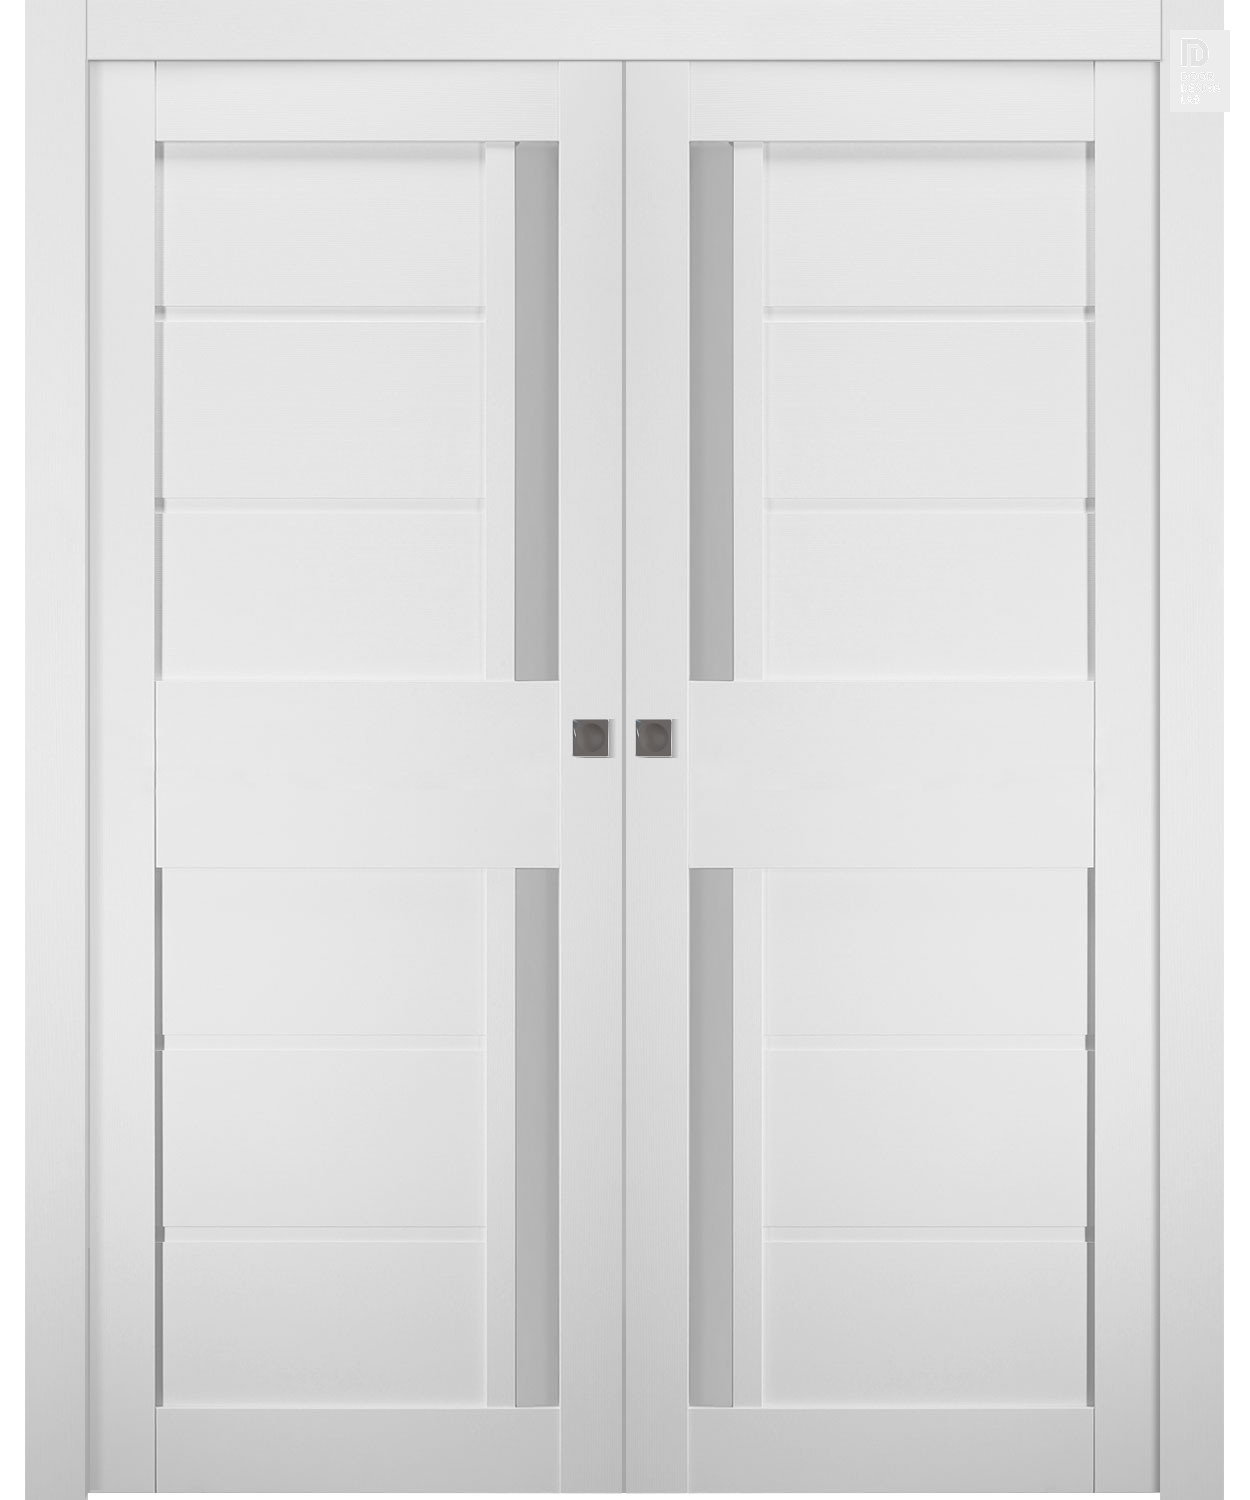 Modern interior door Esta Vetro Bianco Noble Double pocket for $618.00 ...